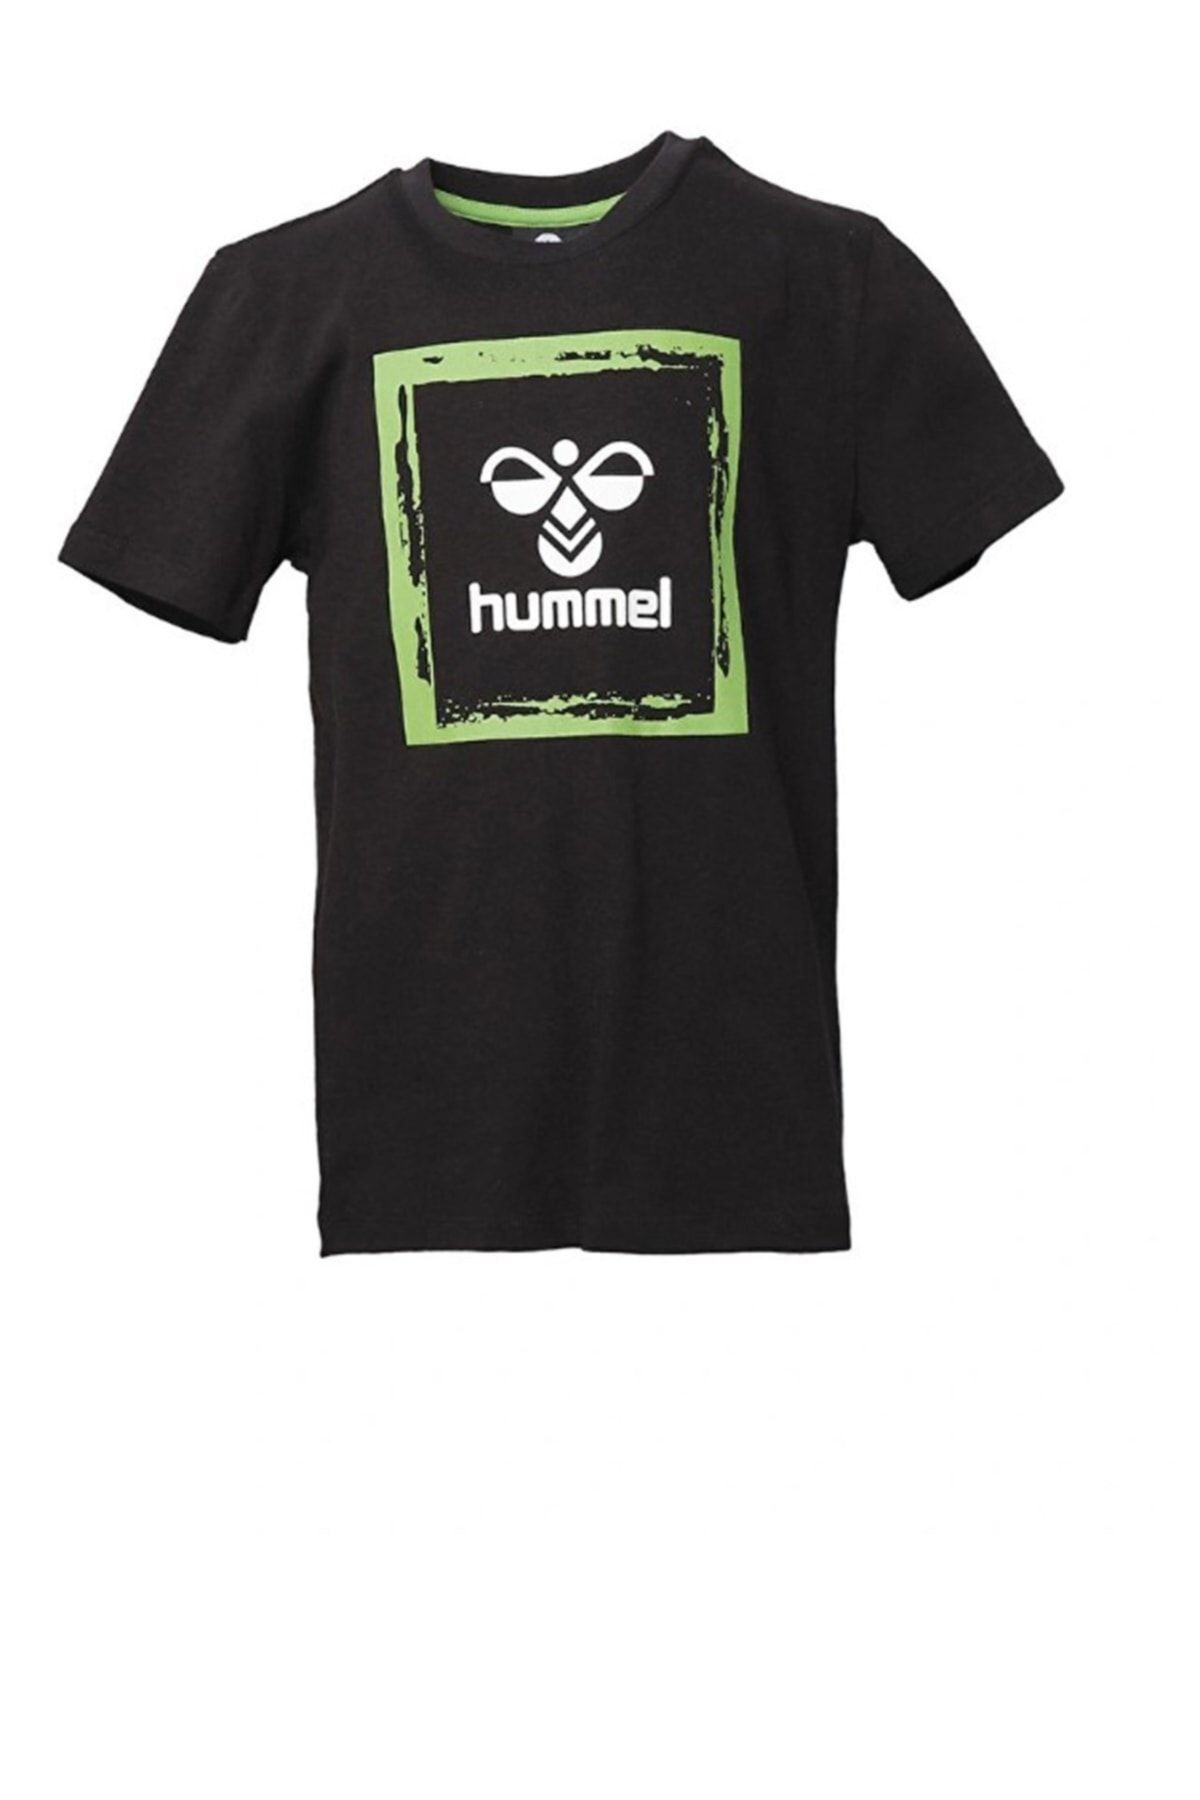 hummel تی شرت Child 911543-2001